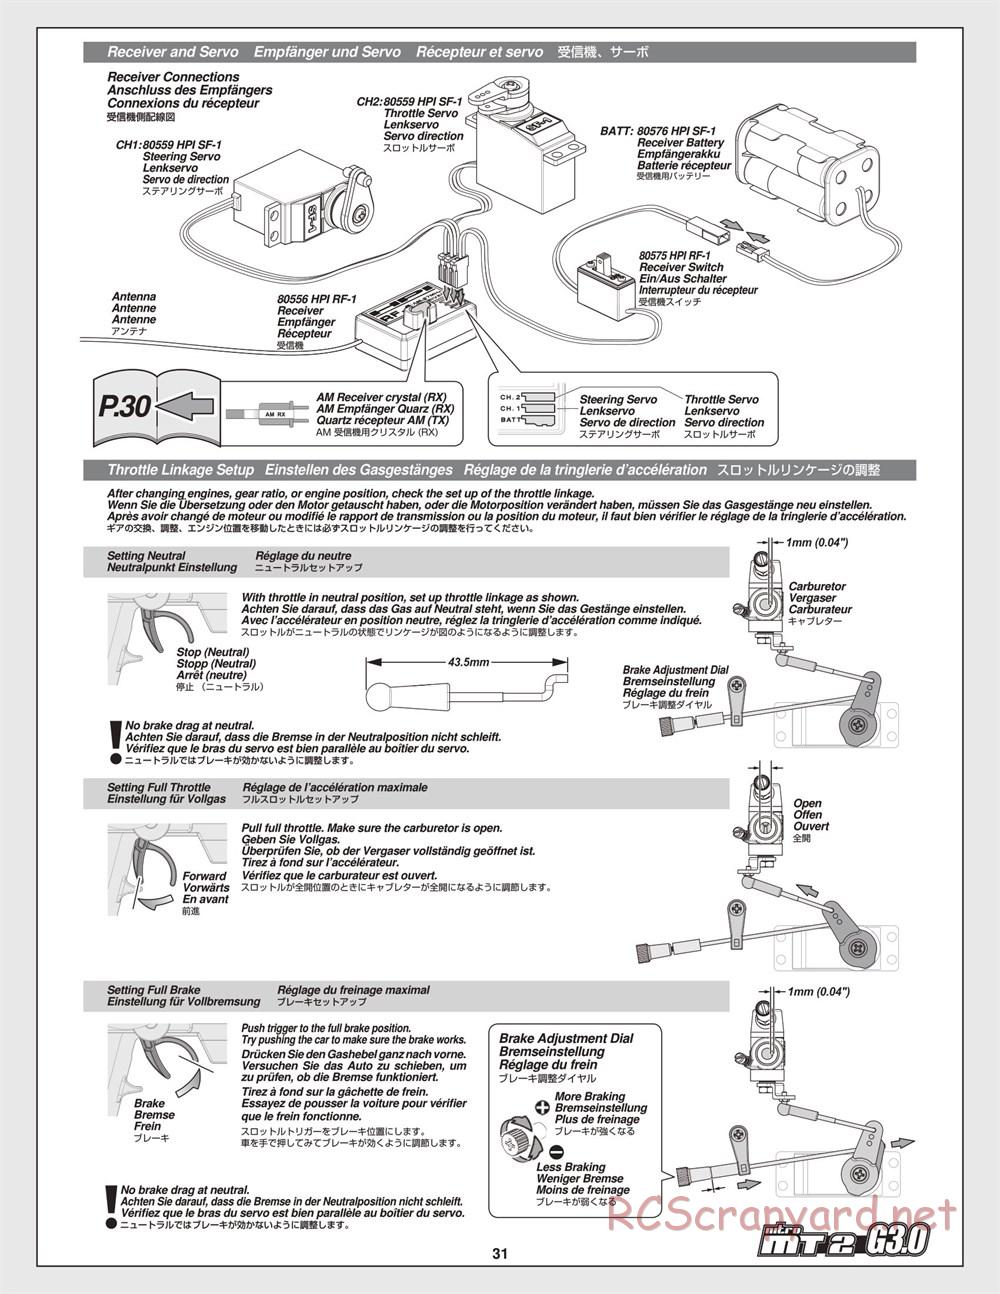 HPI - Nitro MT2 G3.0 - Manual - Page 31